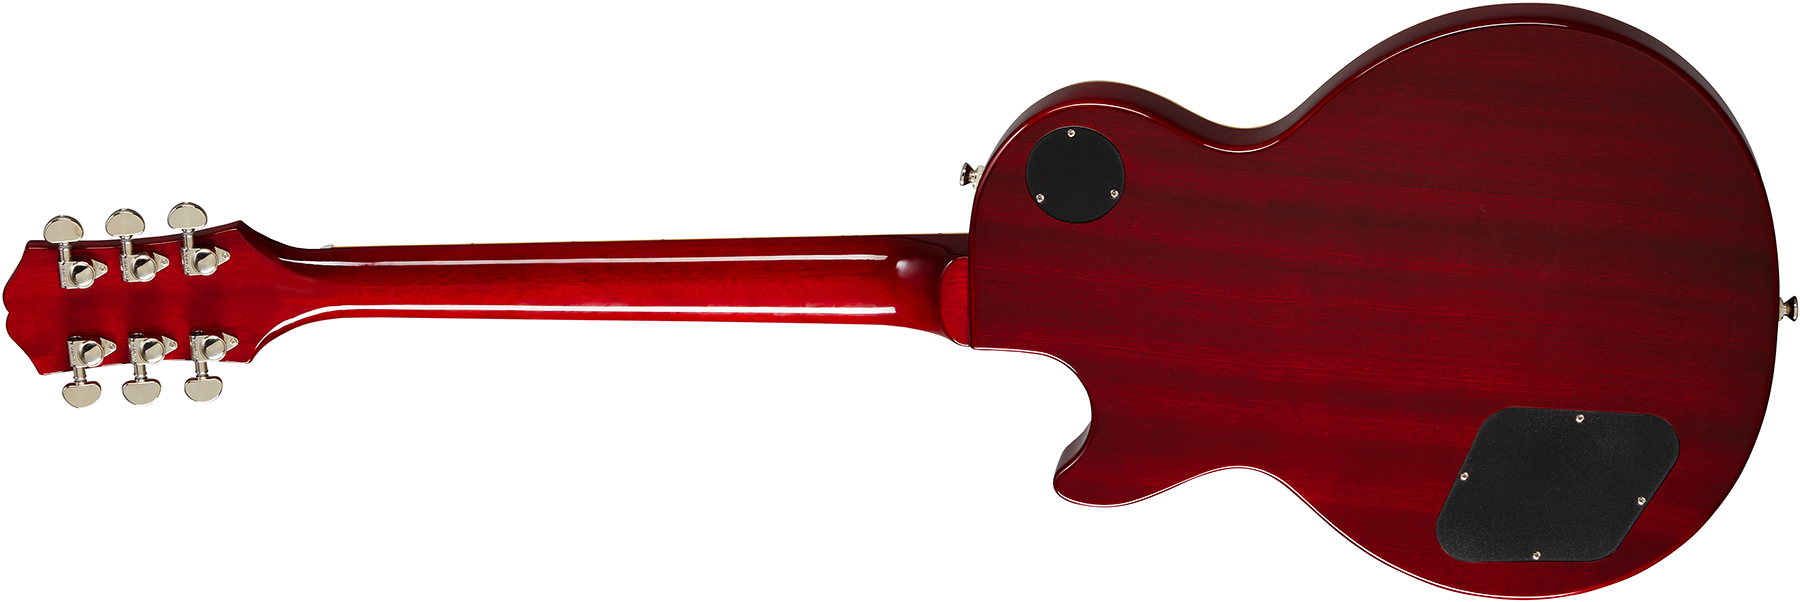 Epiphone Les Paul Standard 60s Gaucher 2h Ht Rw - Iced Tea - Guitarra electrica para zurdos - Variation 1